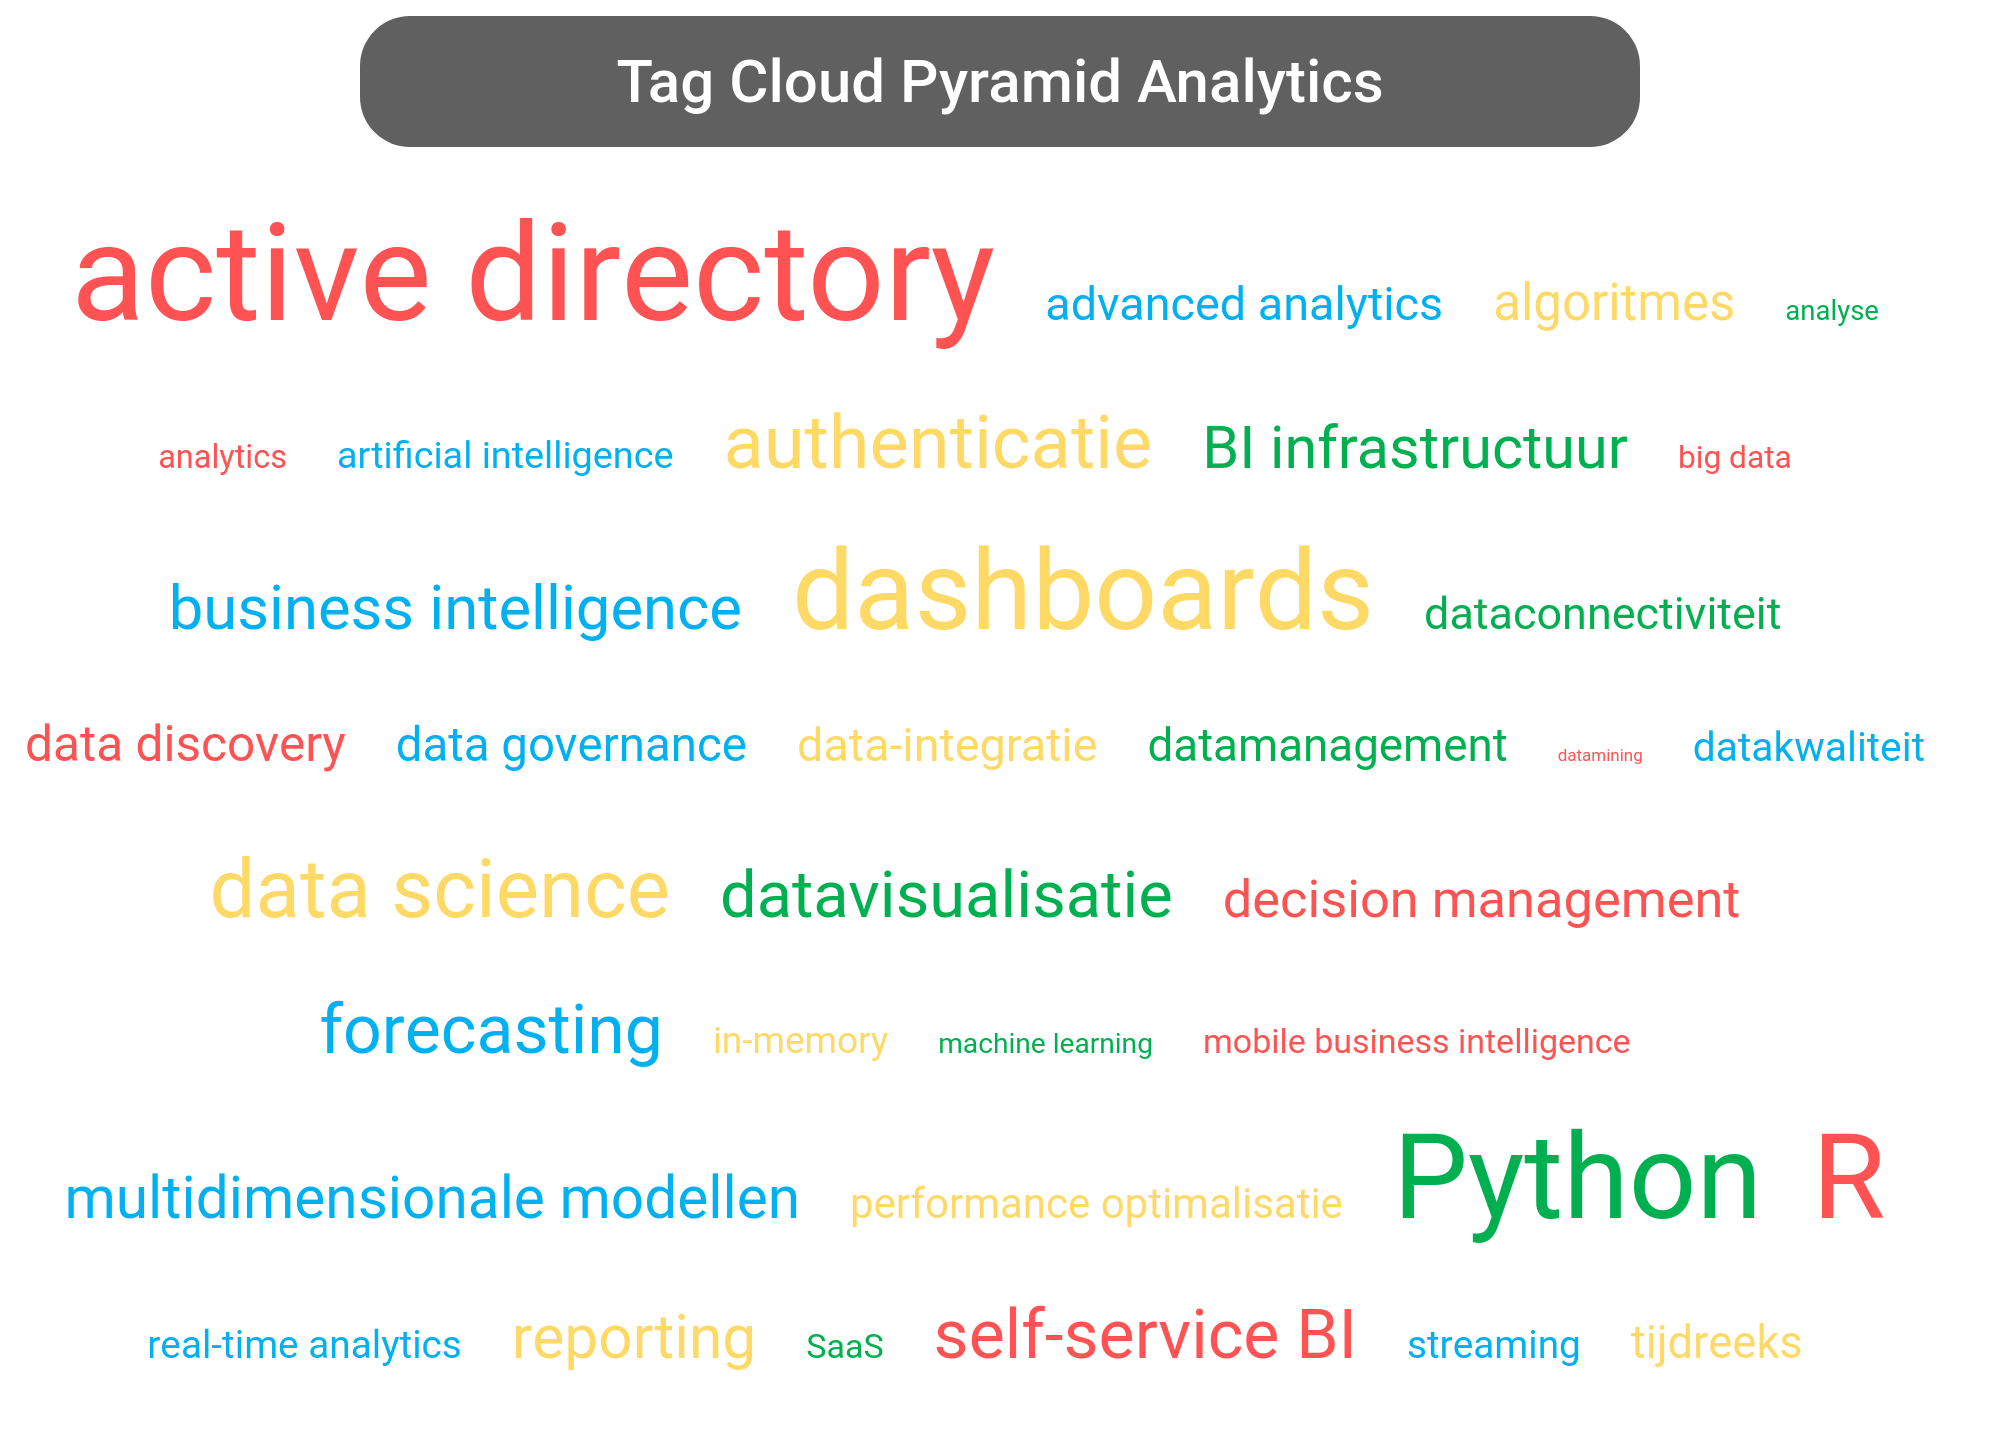 Tag cloud van Pyramid Analytics tools.